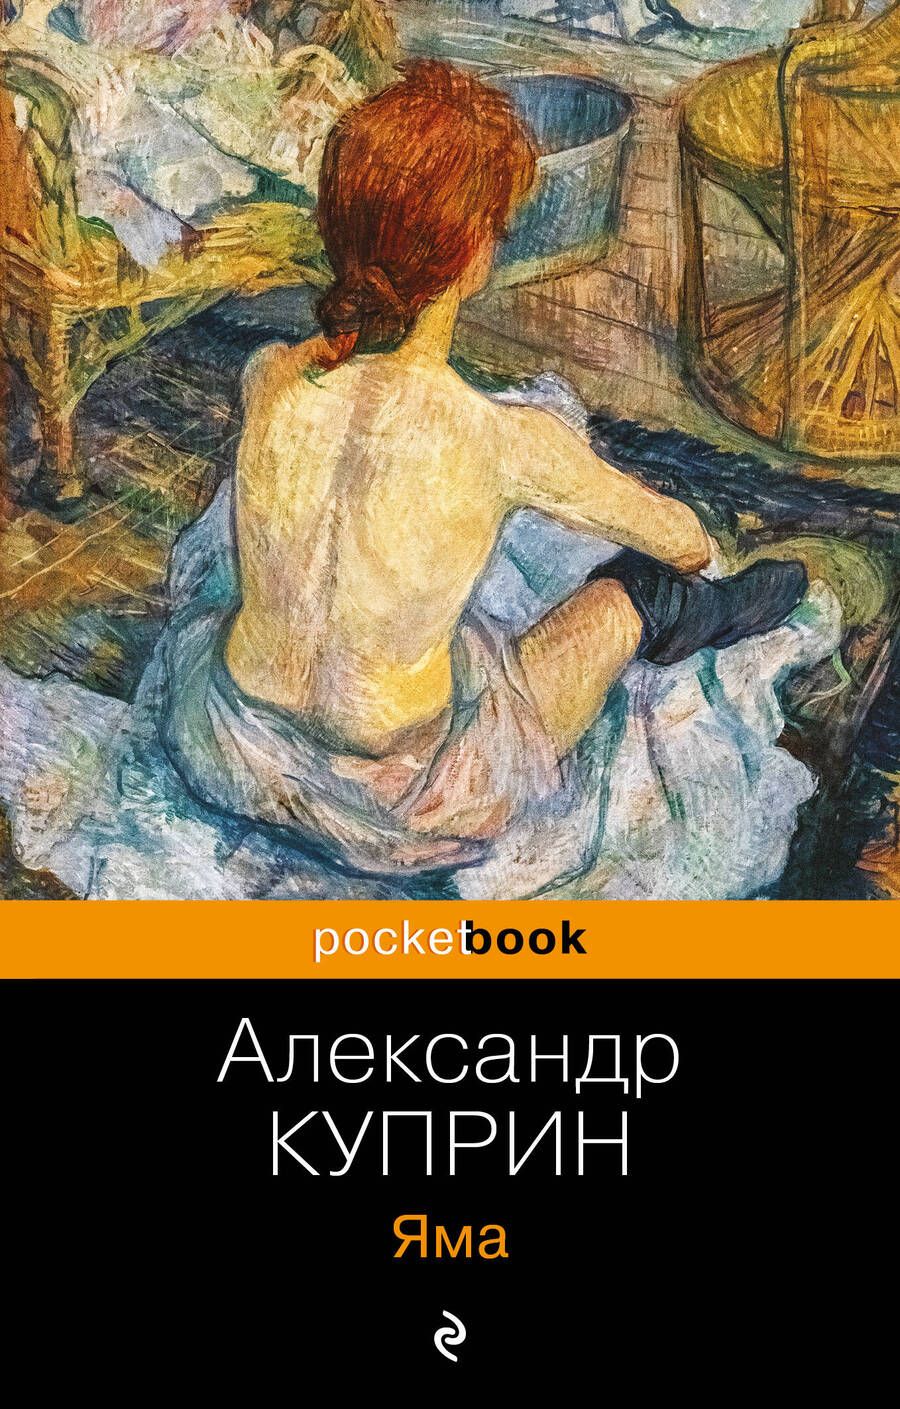 Обложка книги "Александр Куприн: Яма"